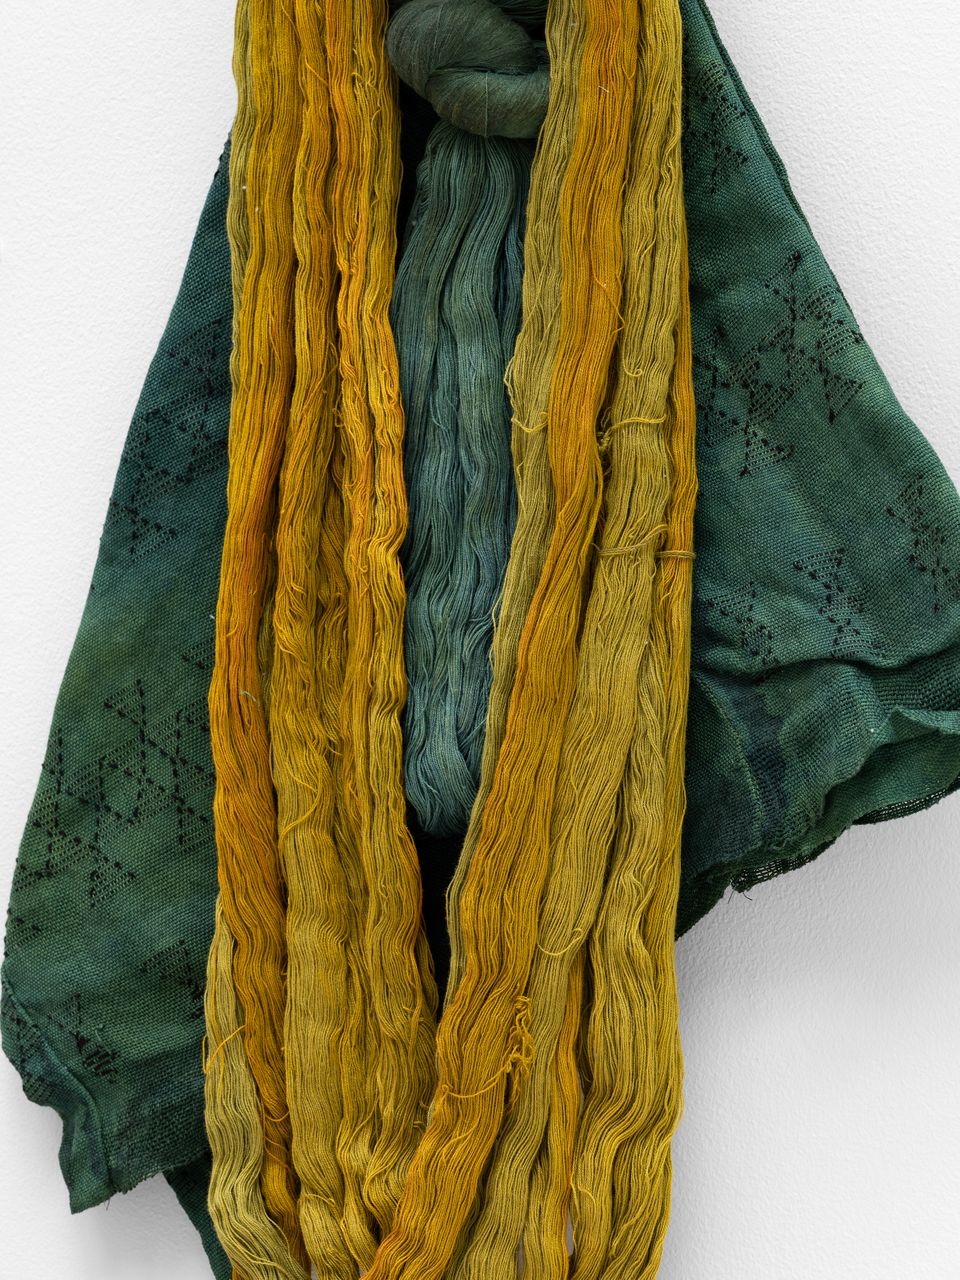 Triángulo/Rax, 2019 | Coconut, textile, thread dyed with Indigofera and yellow dye 24 x 46 cm